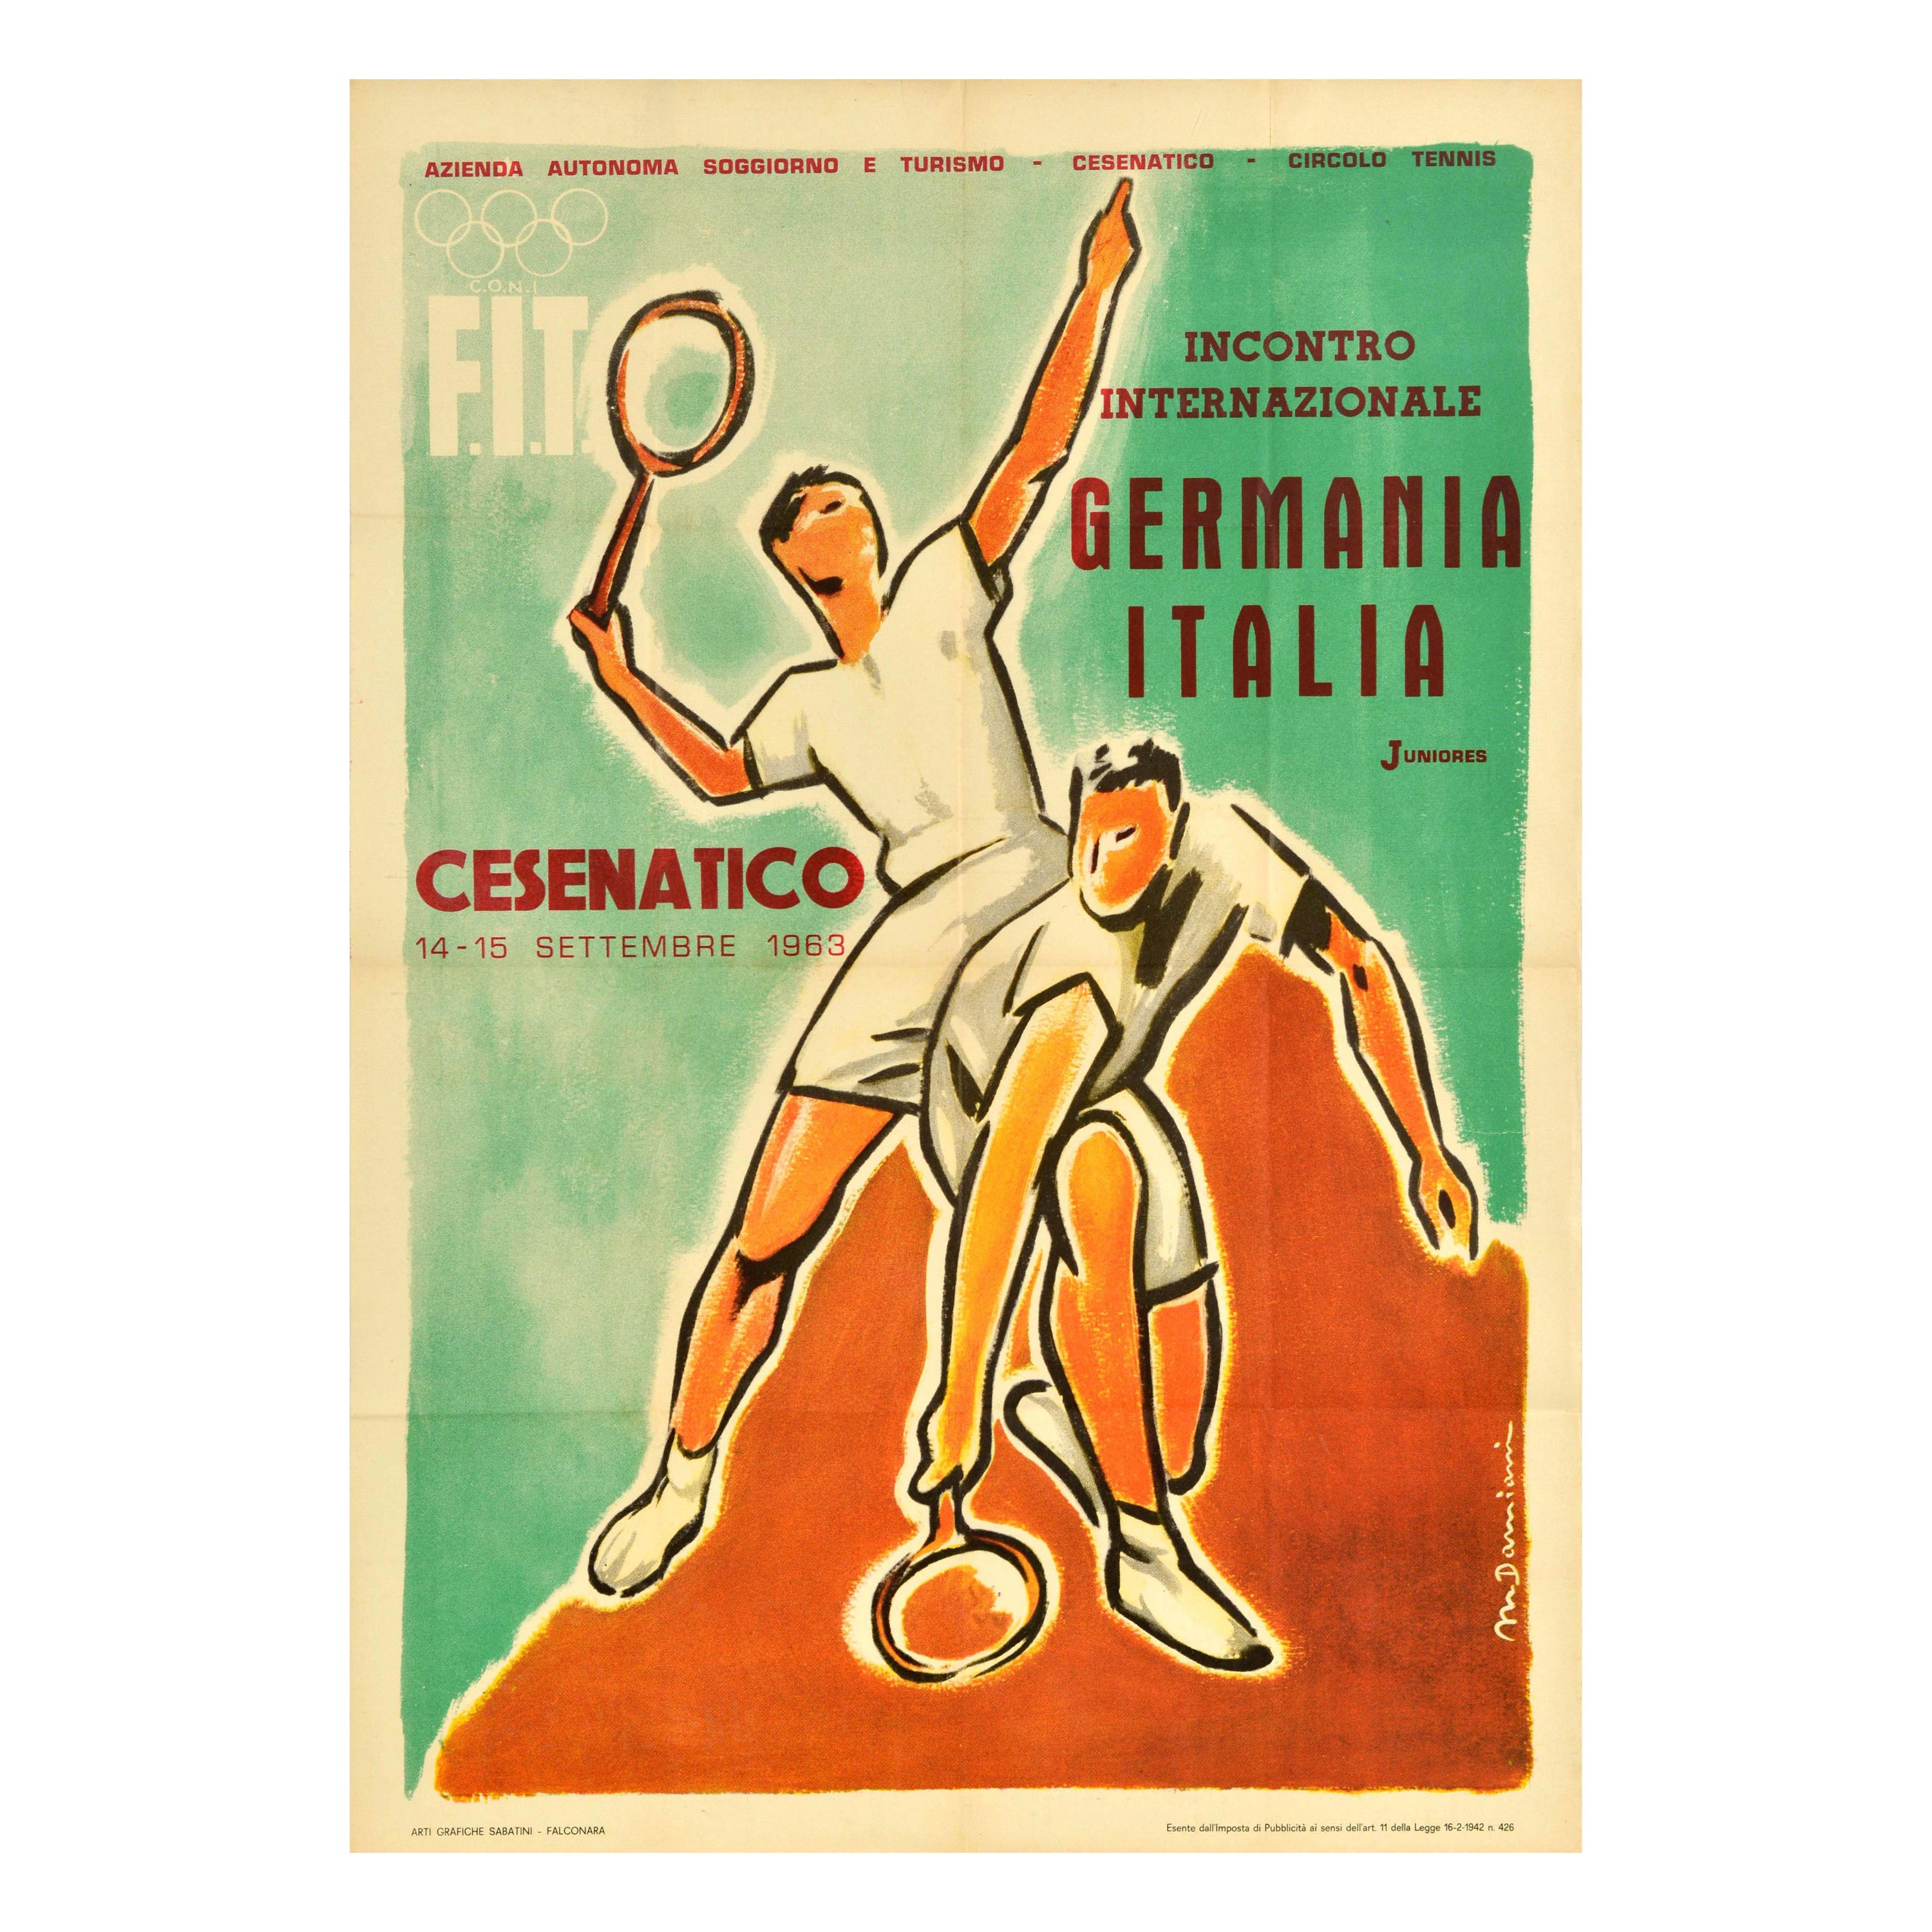 Original-Vintage-Sportplakat, Cesenatico, Tennis meeting, Deutschland, Italien, Coni FIT, Coni FIT im Angebot